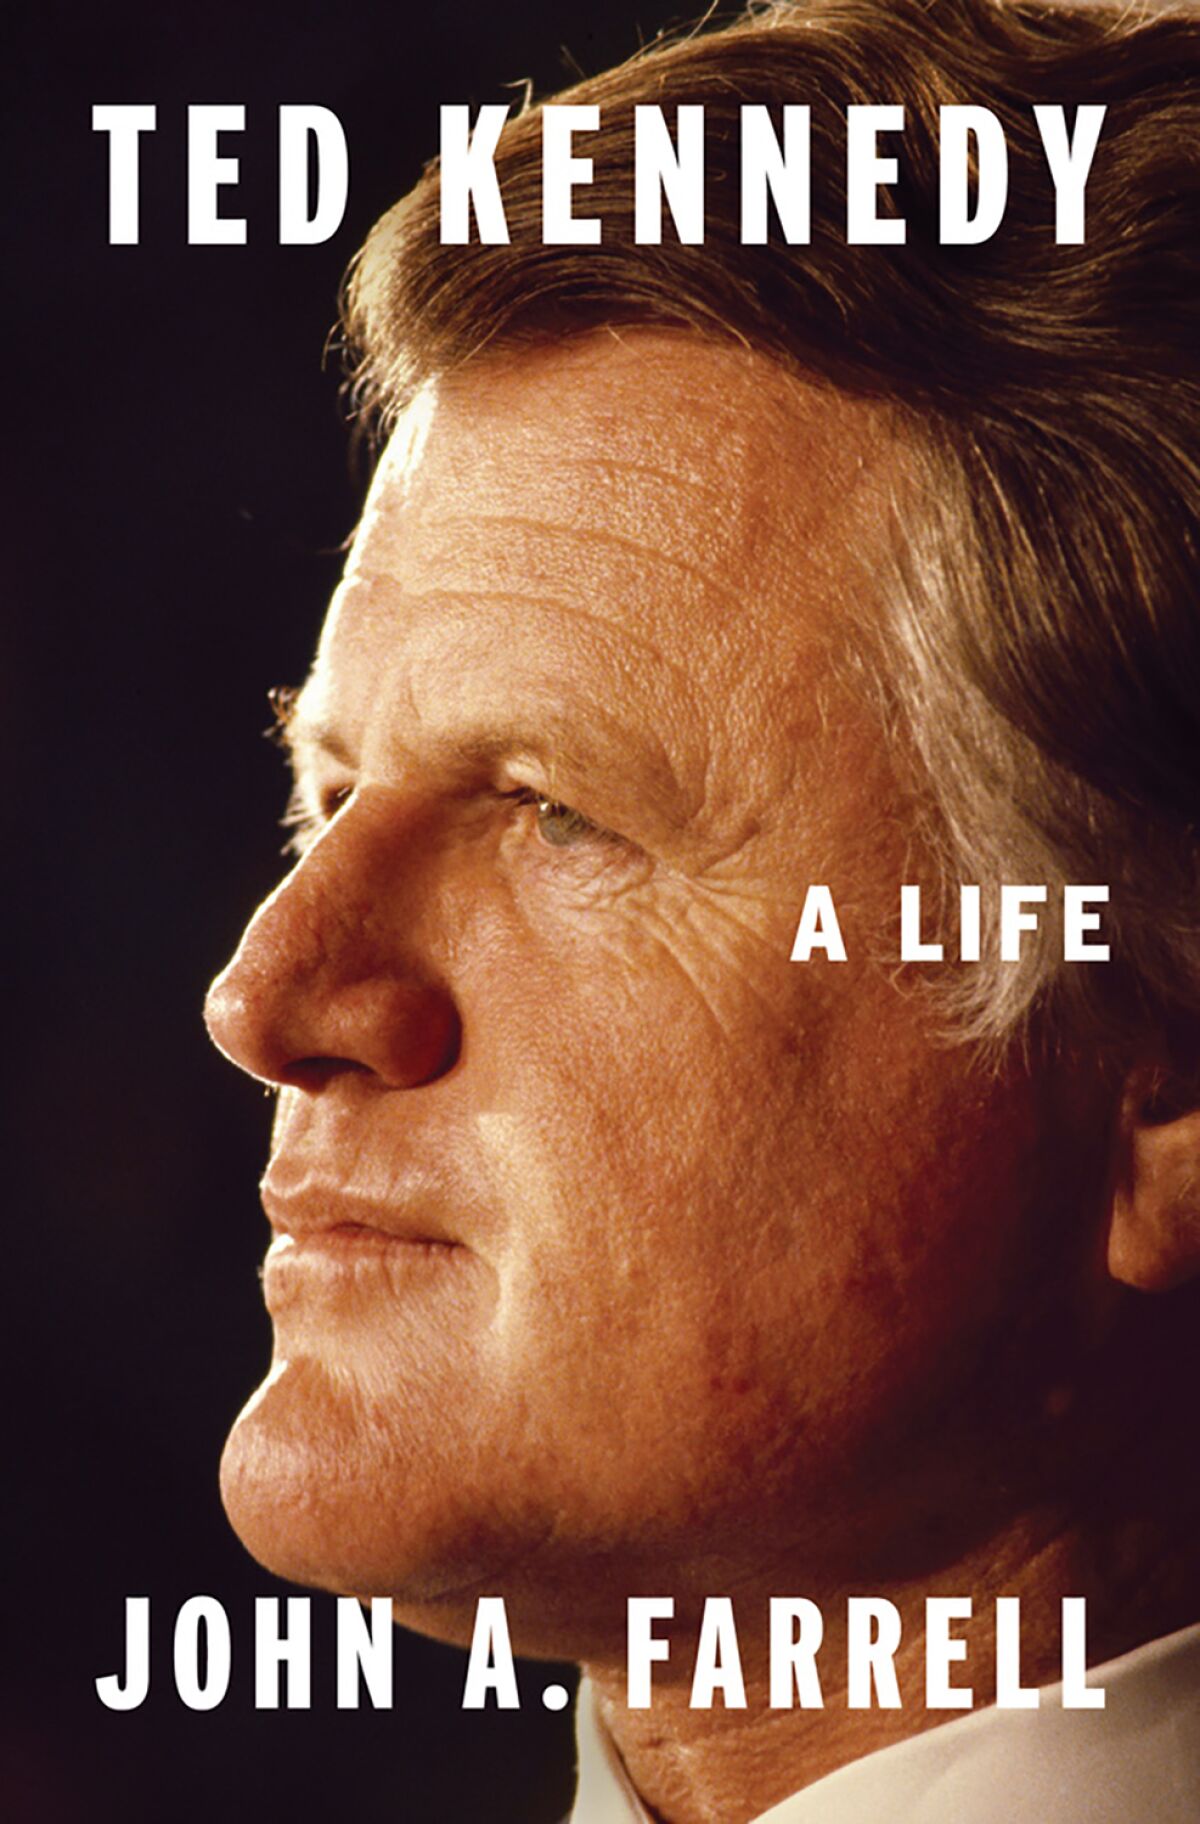 "Ted Kennedy life" John Farrell